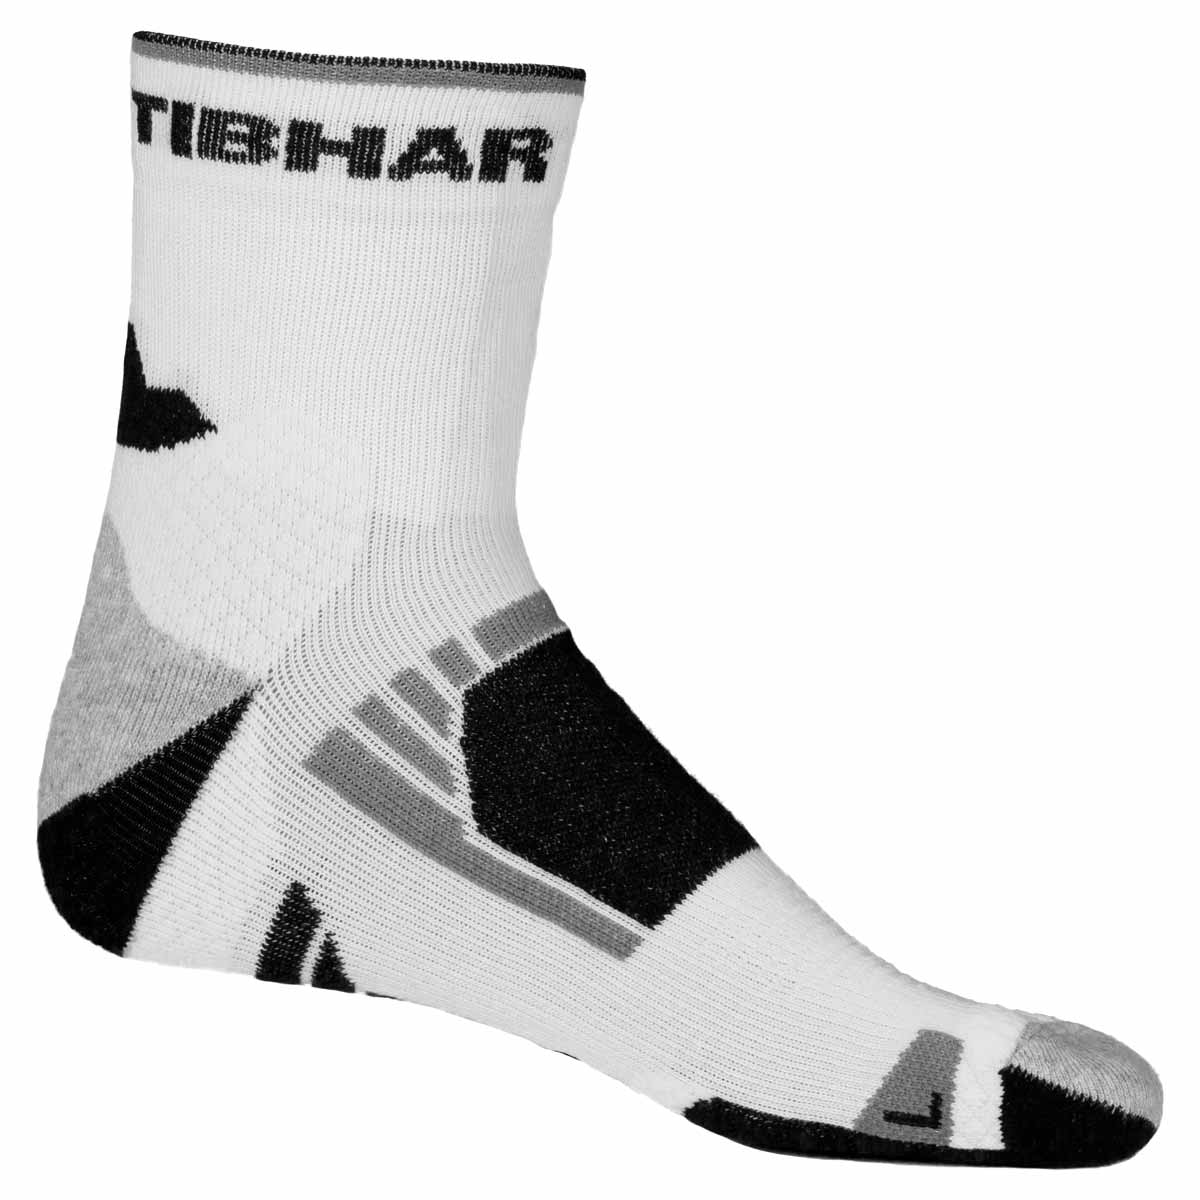 TIBHAR Socks Tech